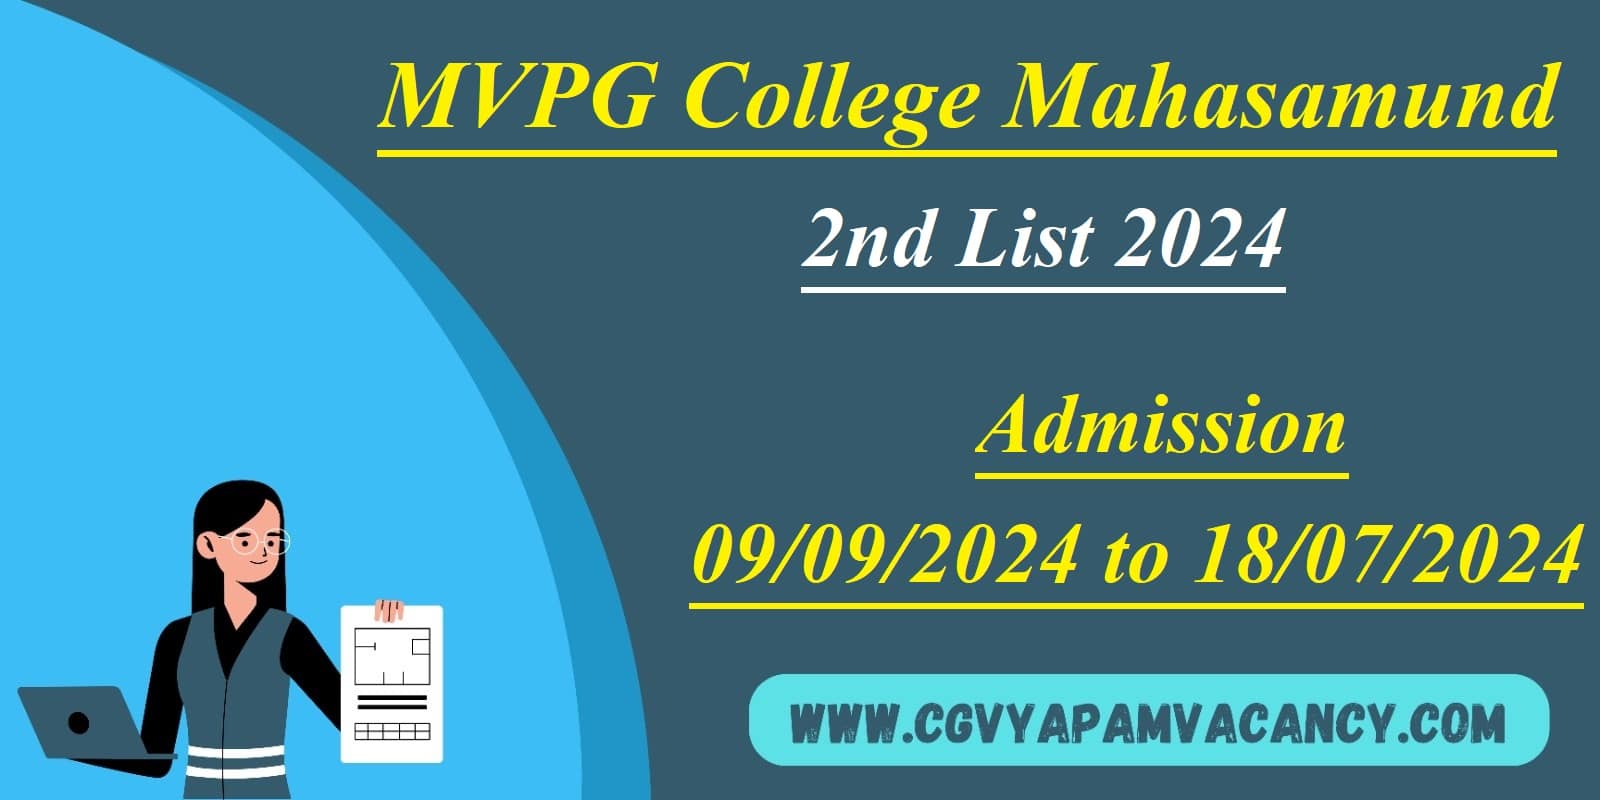 MVPG College Mahasamund For Admission 2nd List 2024